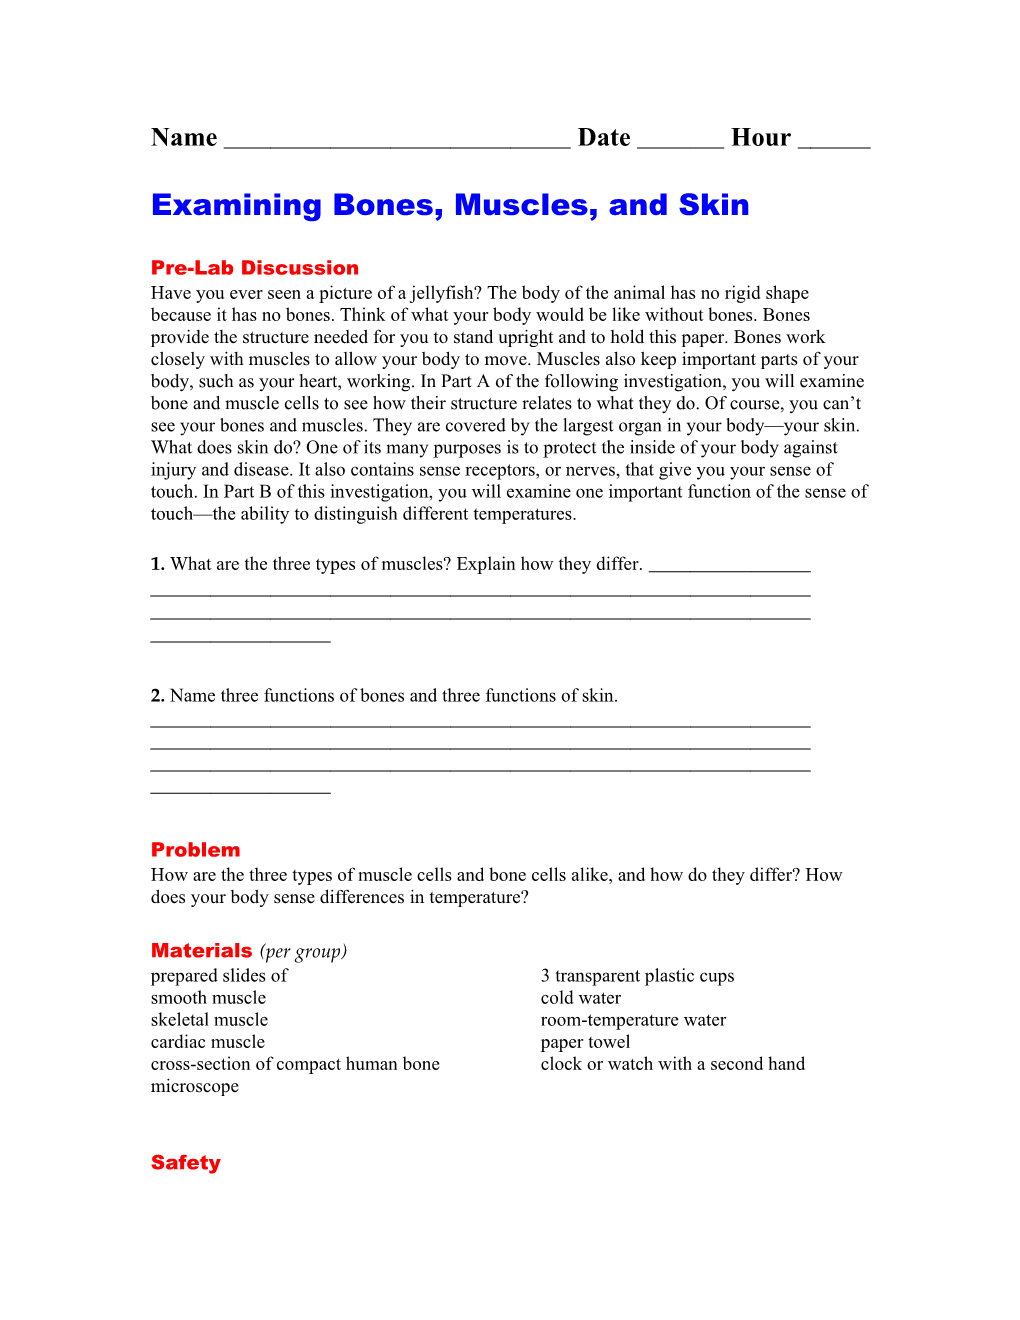 Examining Bones, Muscles, and Skin